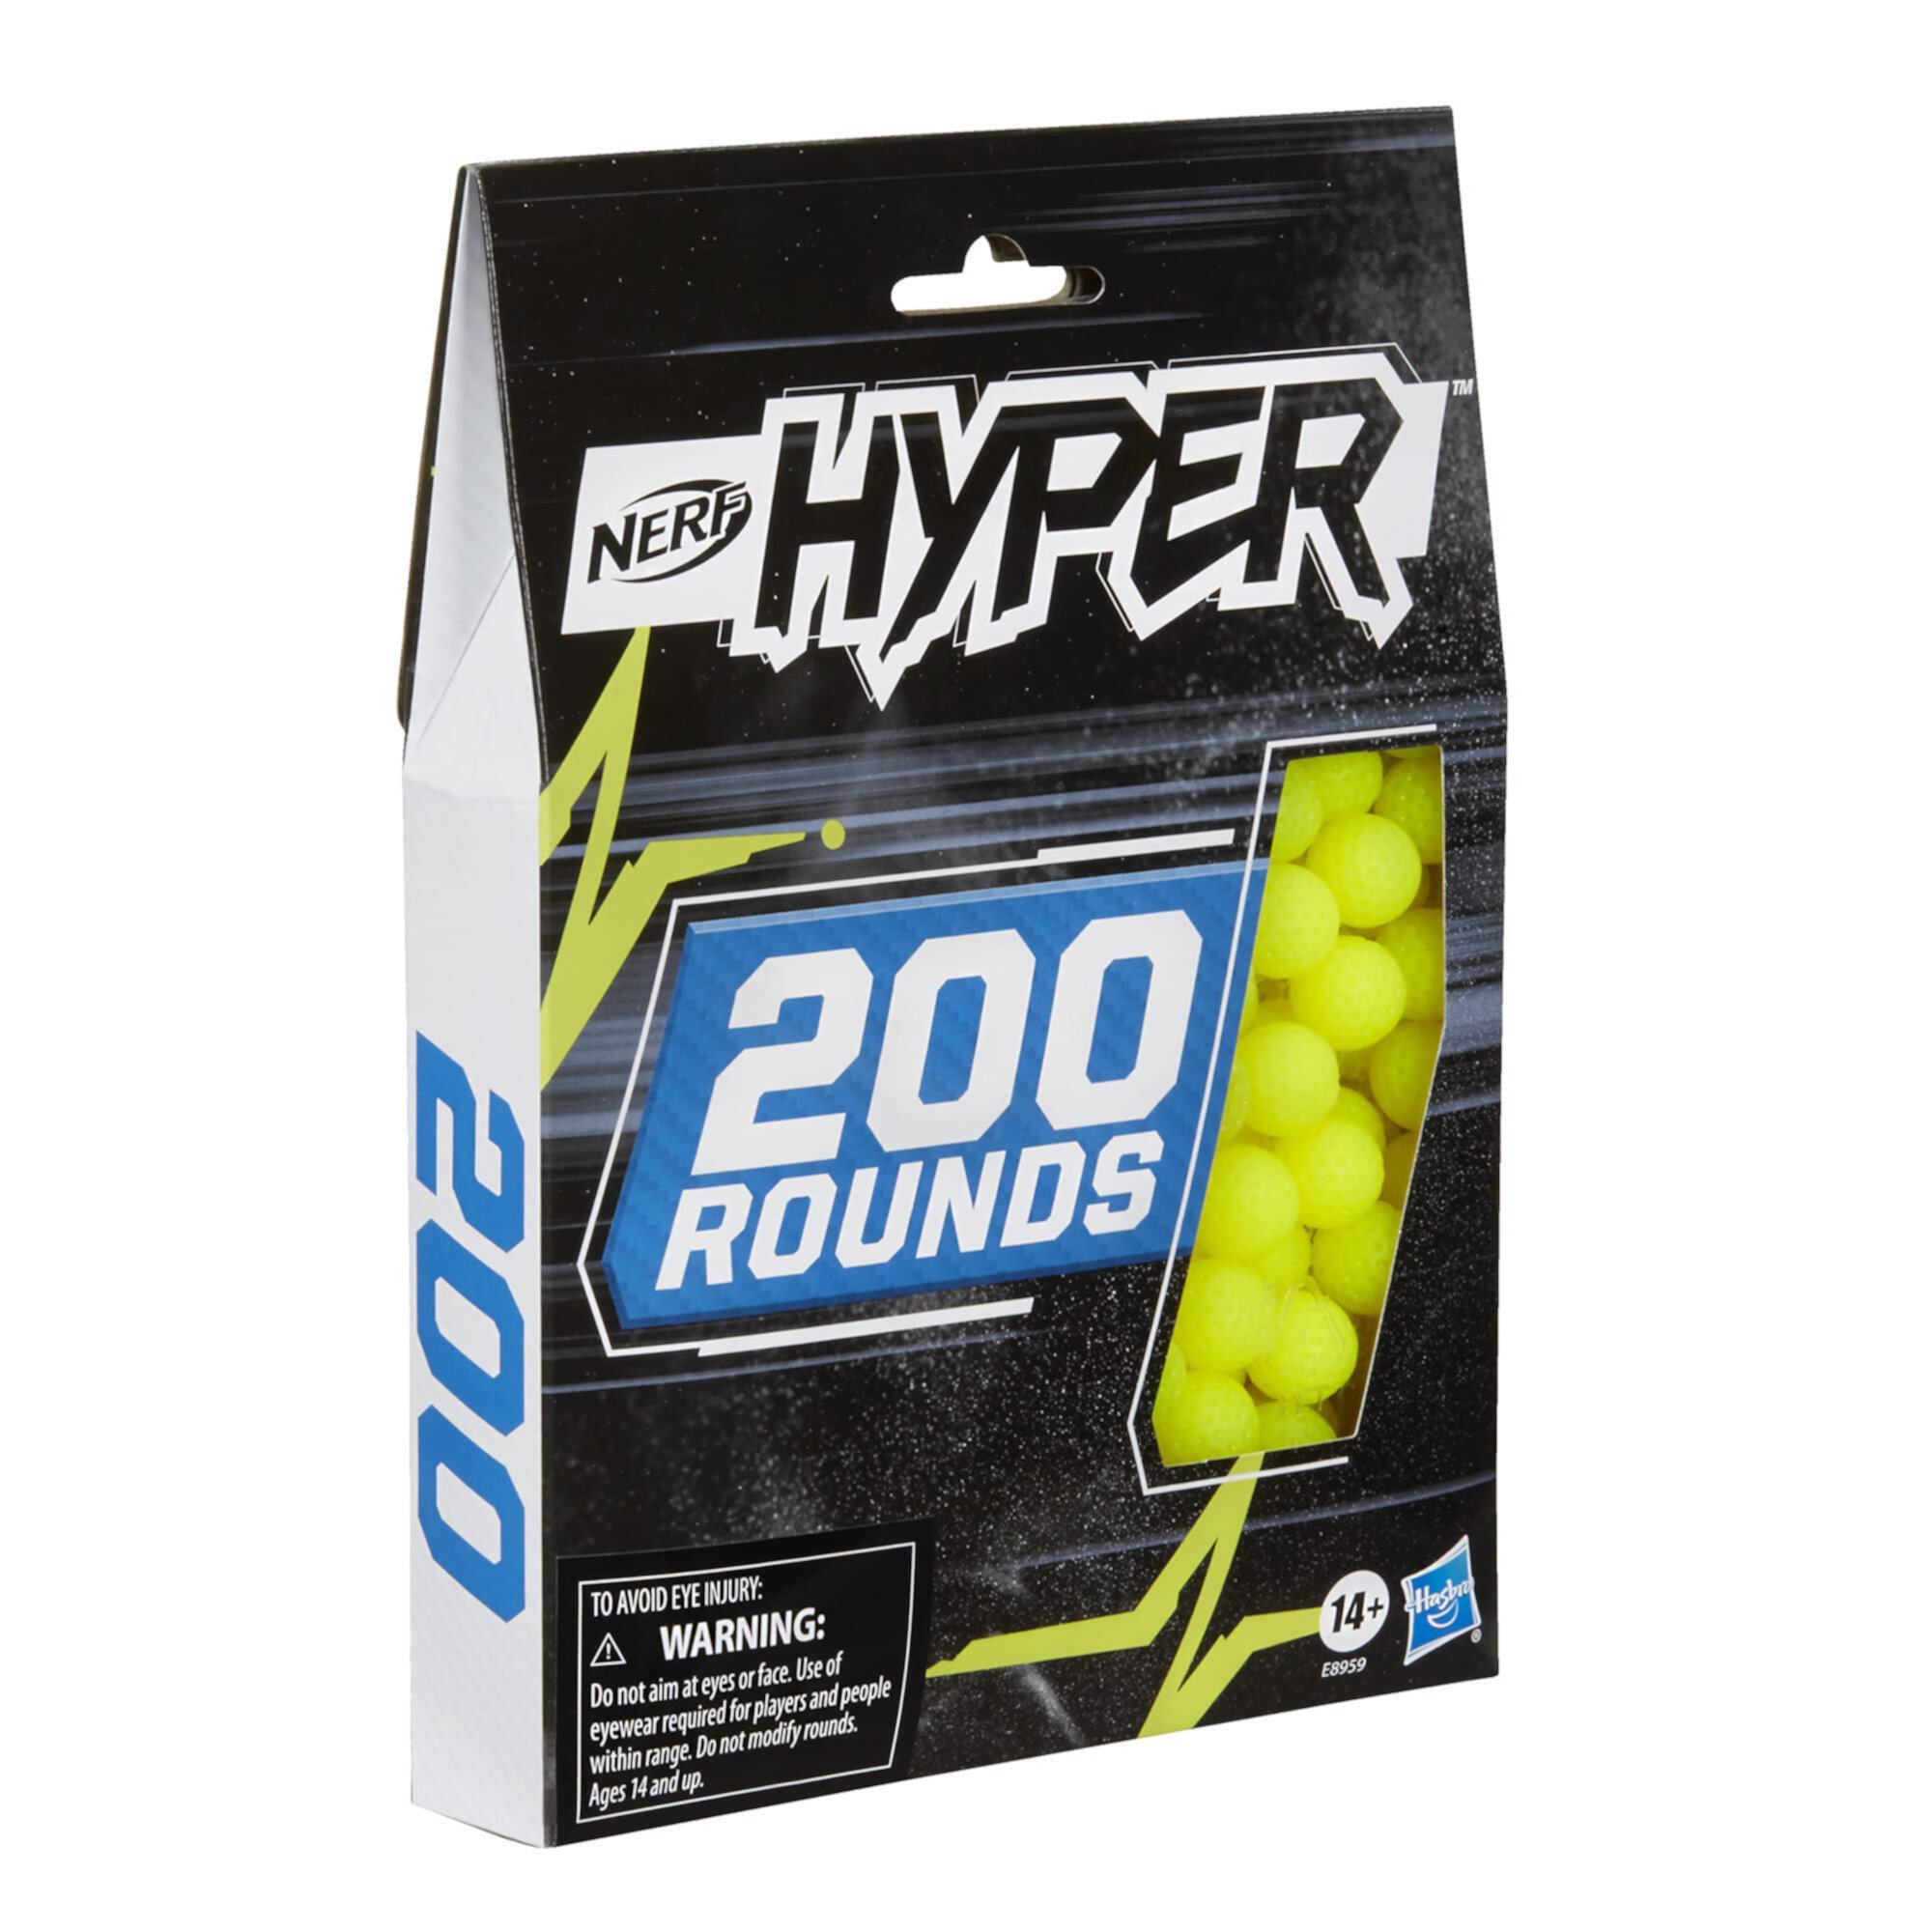 NERF Hyper 200-Round Refill включает 200 Hyper Rounds для использования Hyper Blasters, запаситесь Hyper Games Nerf